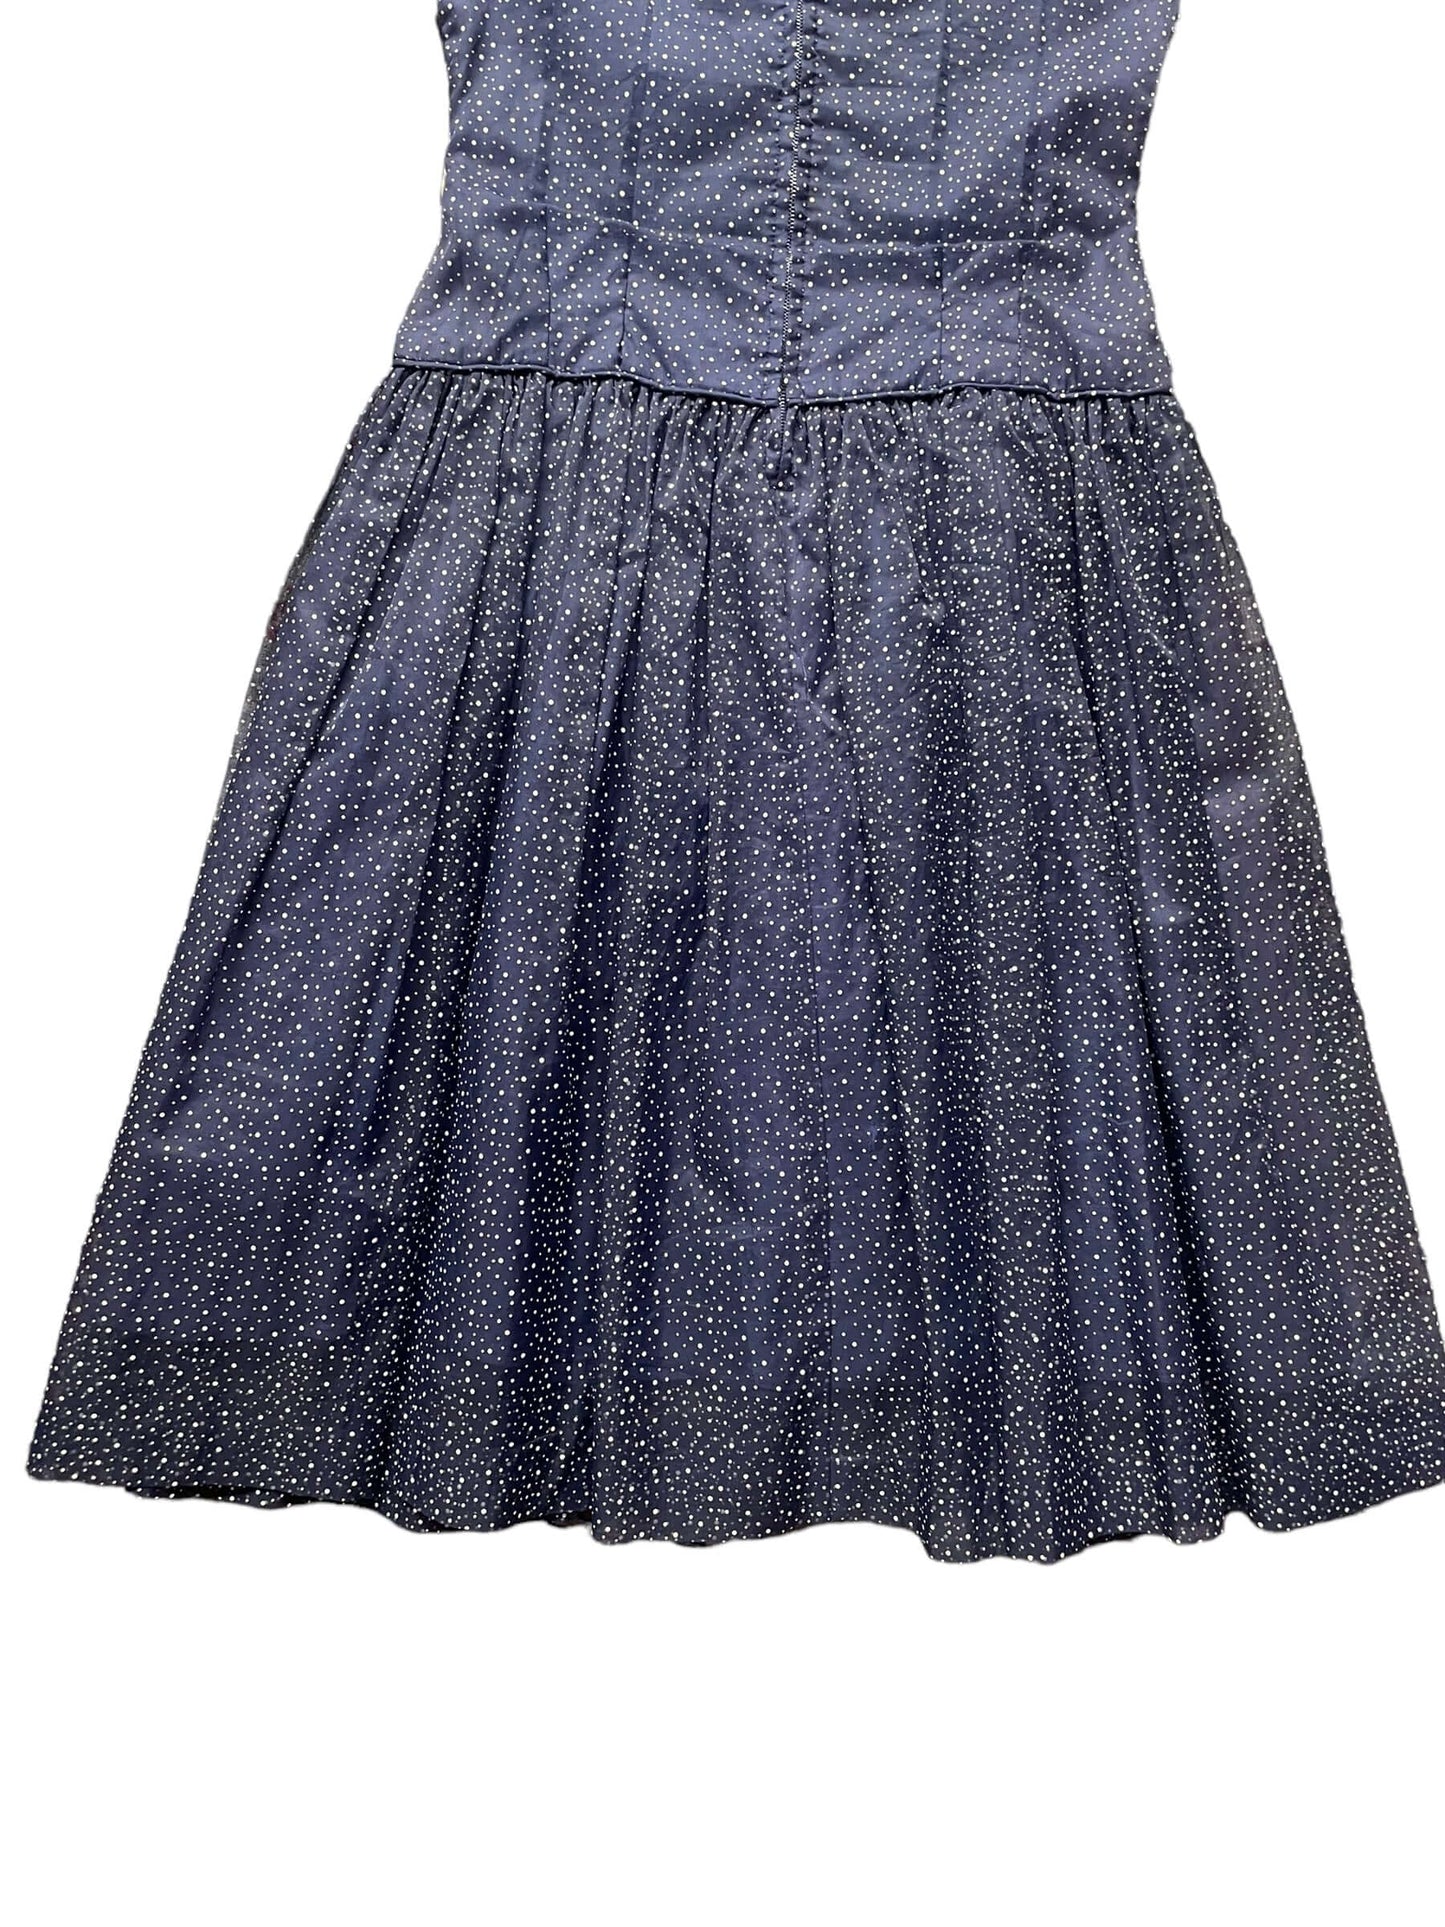 Vintage 1940s Navy Blue Swiss Dot Dress |  Barn Owl Vintage Dresses | Seattle Vintage Ladies Clothing